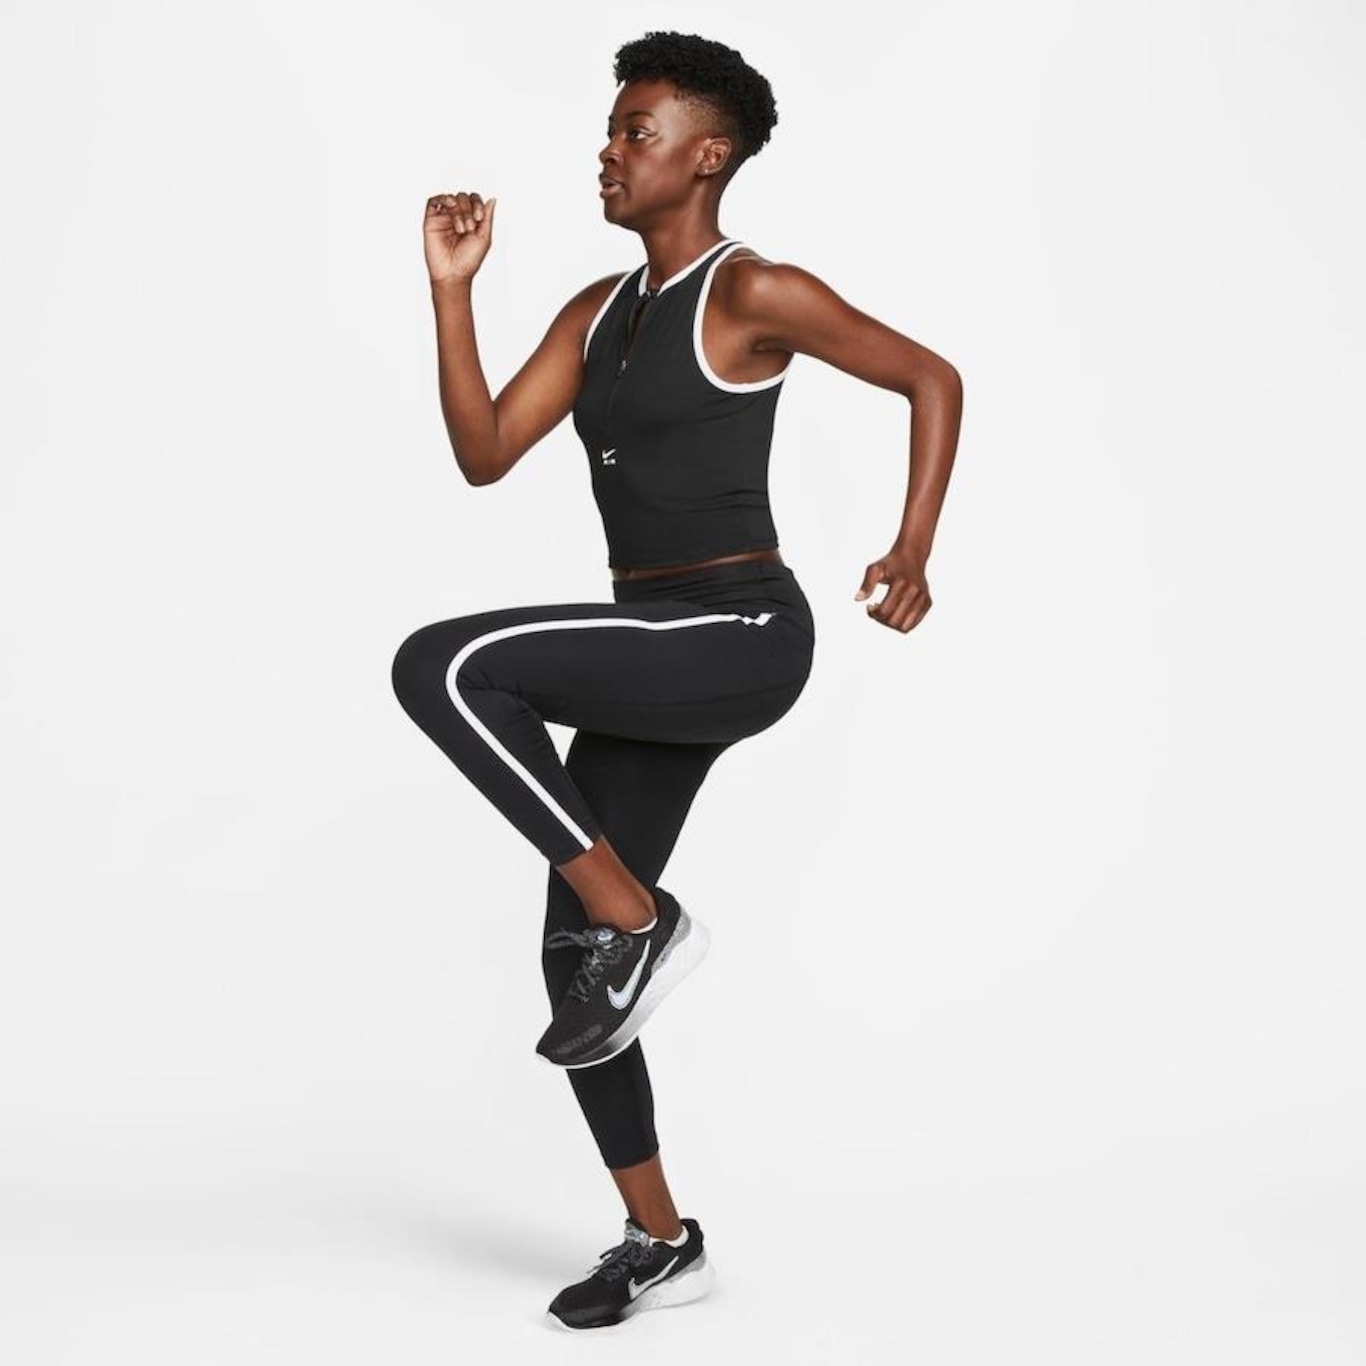 Legging Nike Dri-fit Fast Feminina